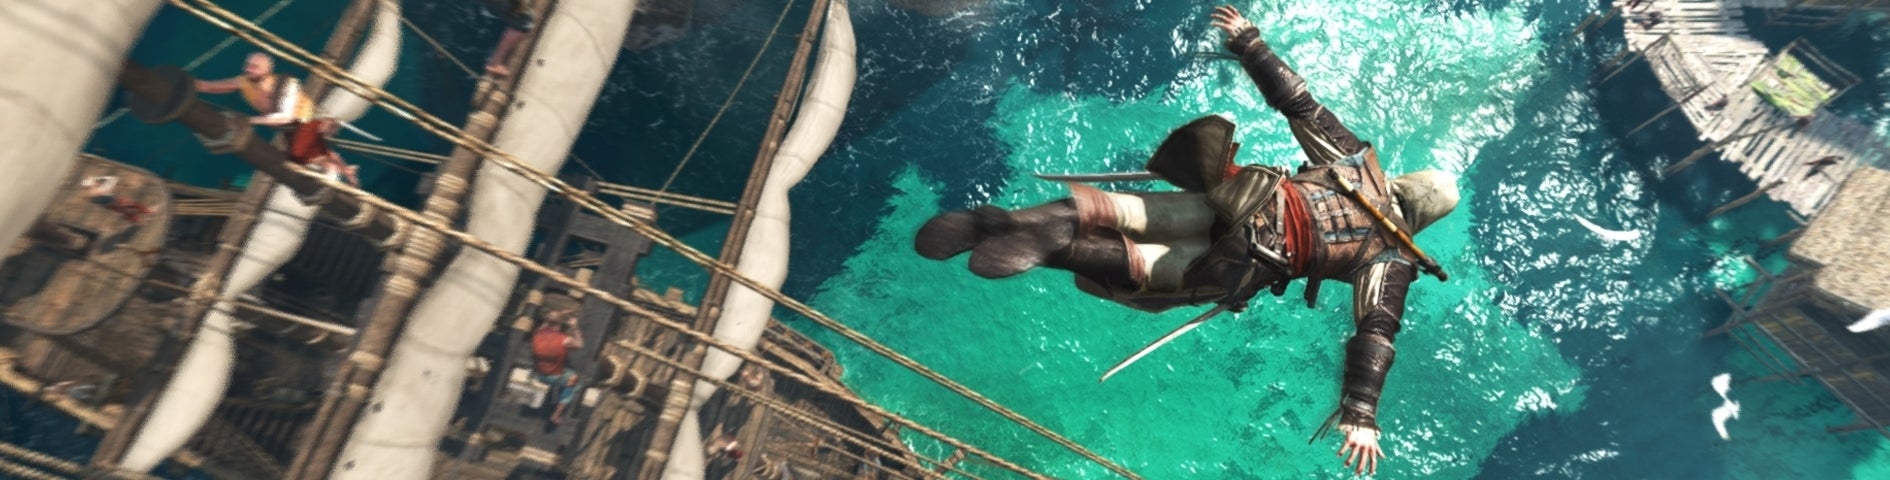 Bilder zu Eg.de Frühstart - Dead Island: Riptide, Assassin's Creed 4, Zynga